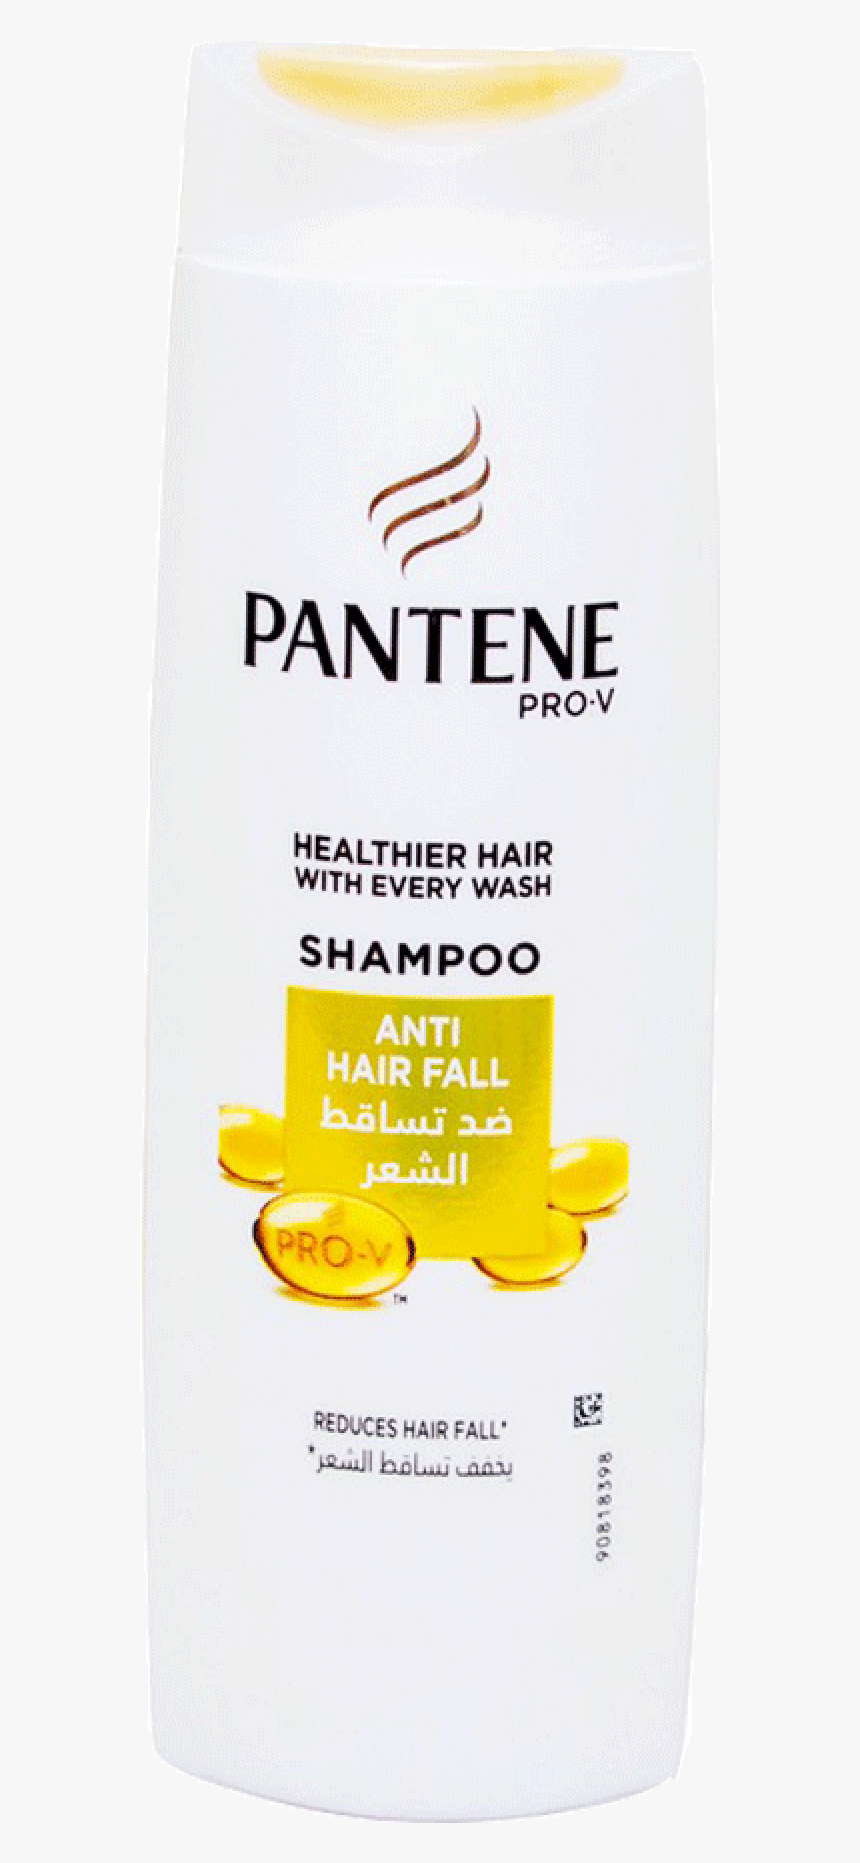 Pantene Shampoo Anti Hair Fall 400 Ml - Pantene, HD Png Download, Free Download